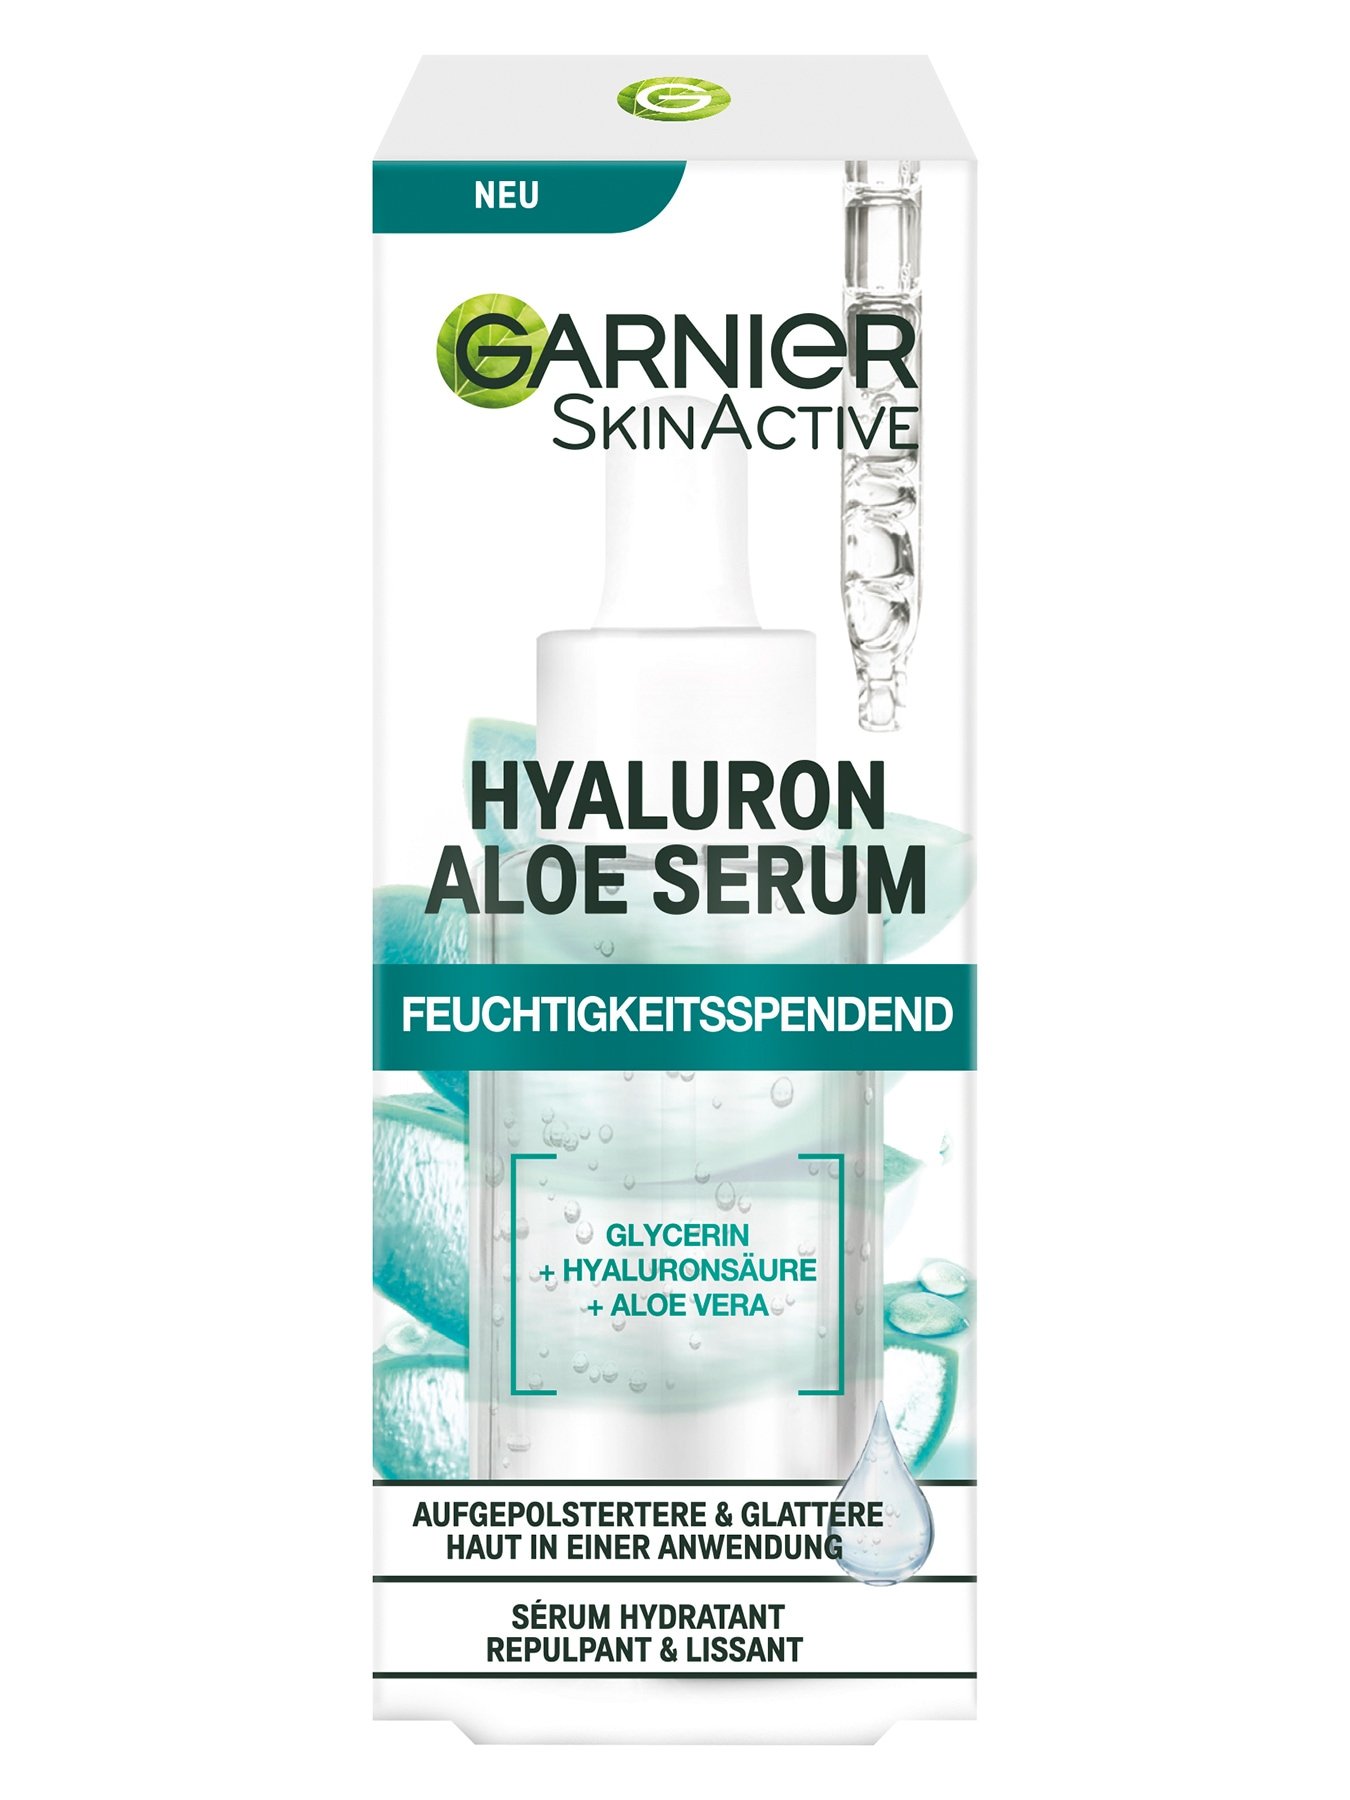 SkinActive Hyaluron Aloe Serum mit | Garnier vera Aloe